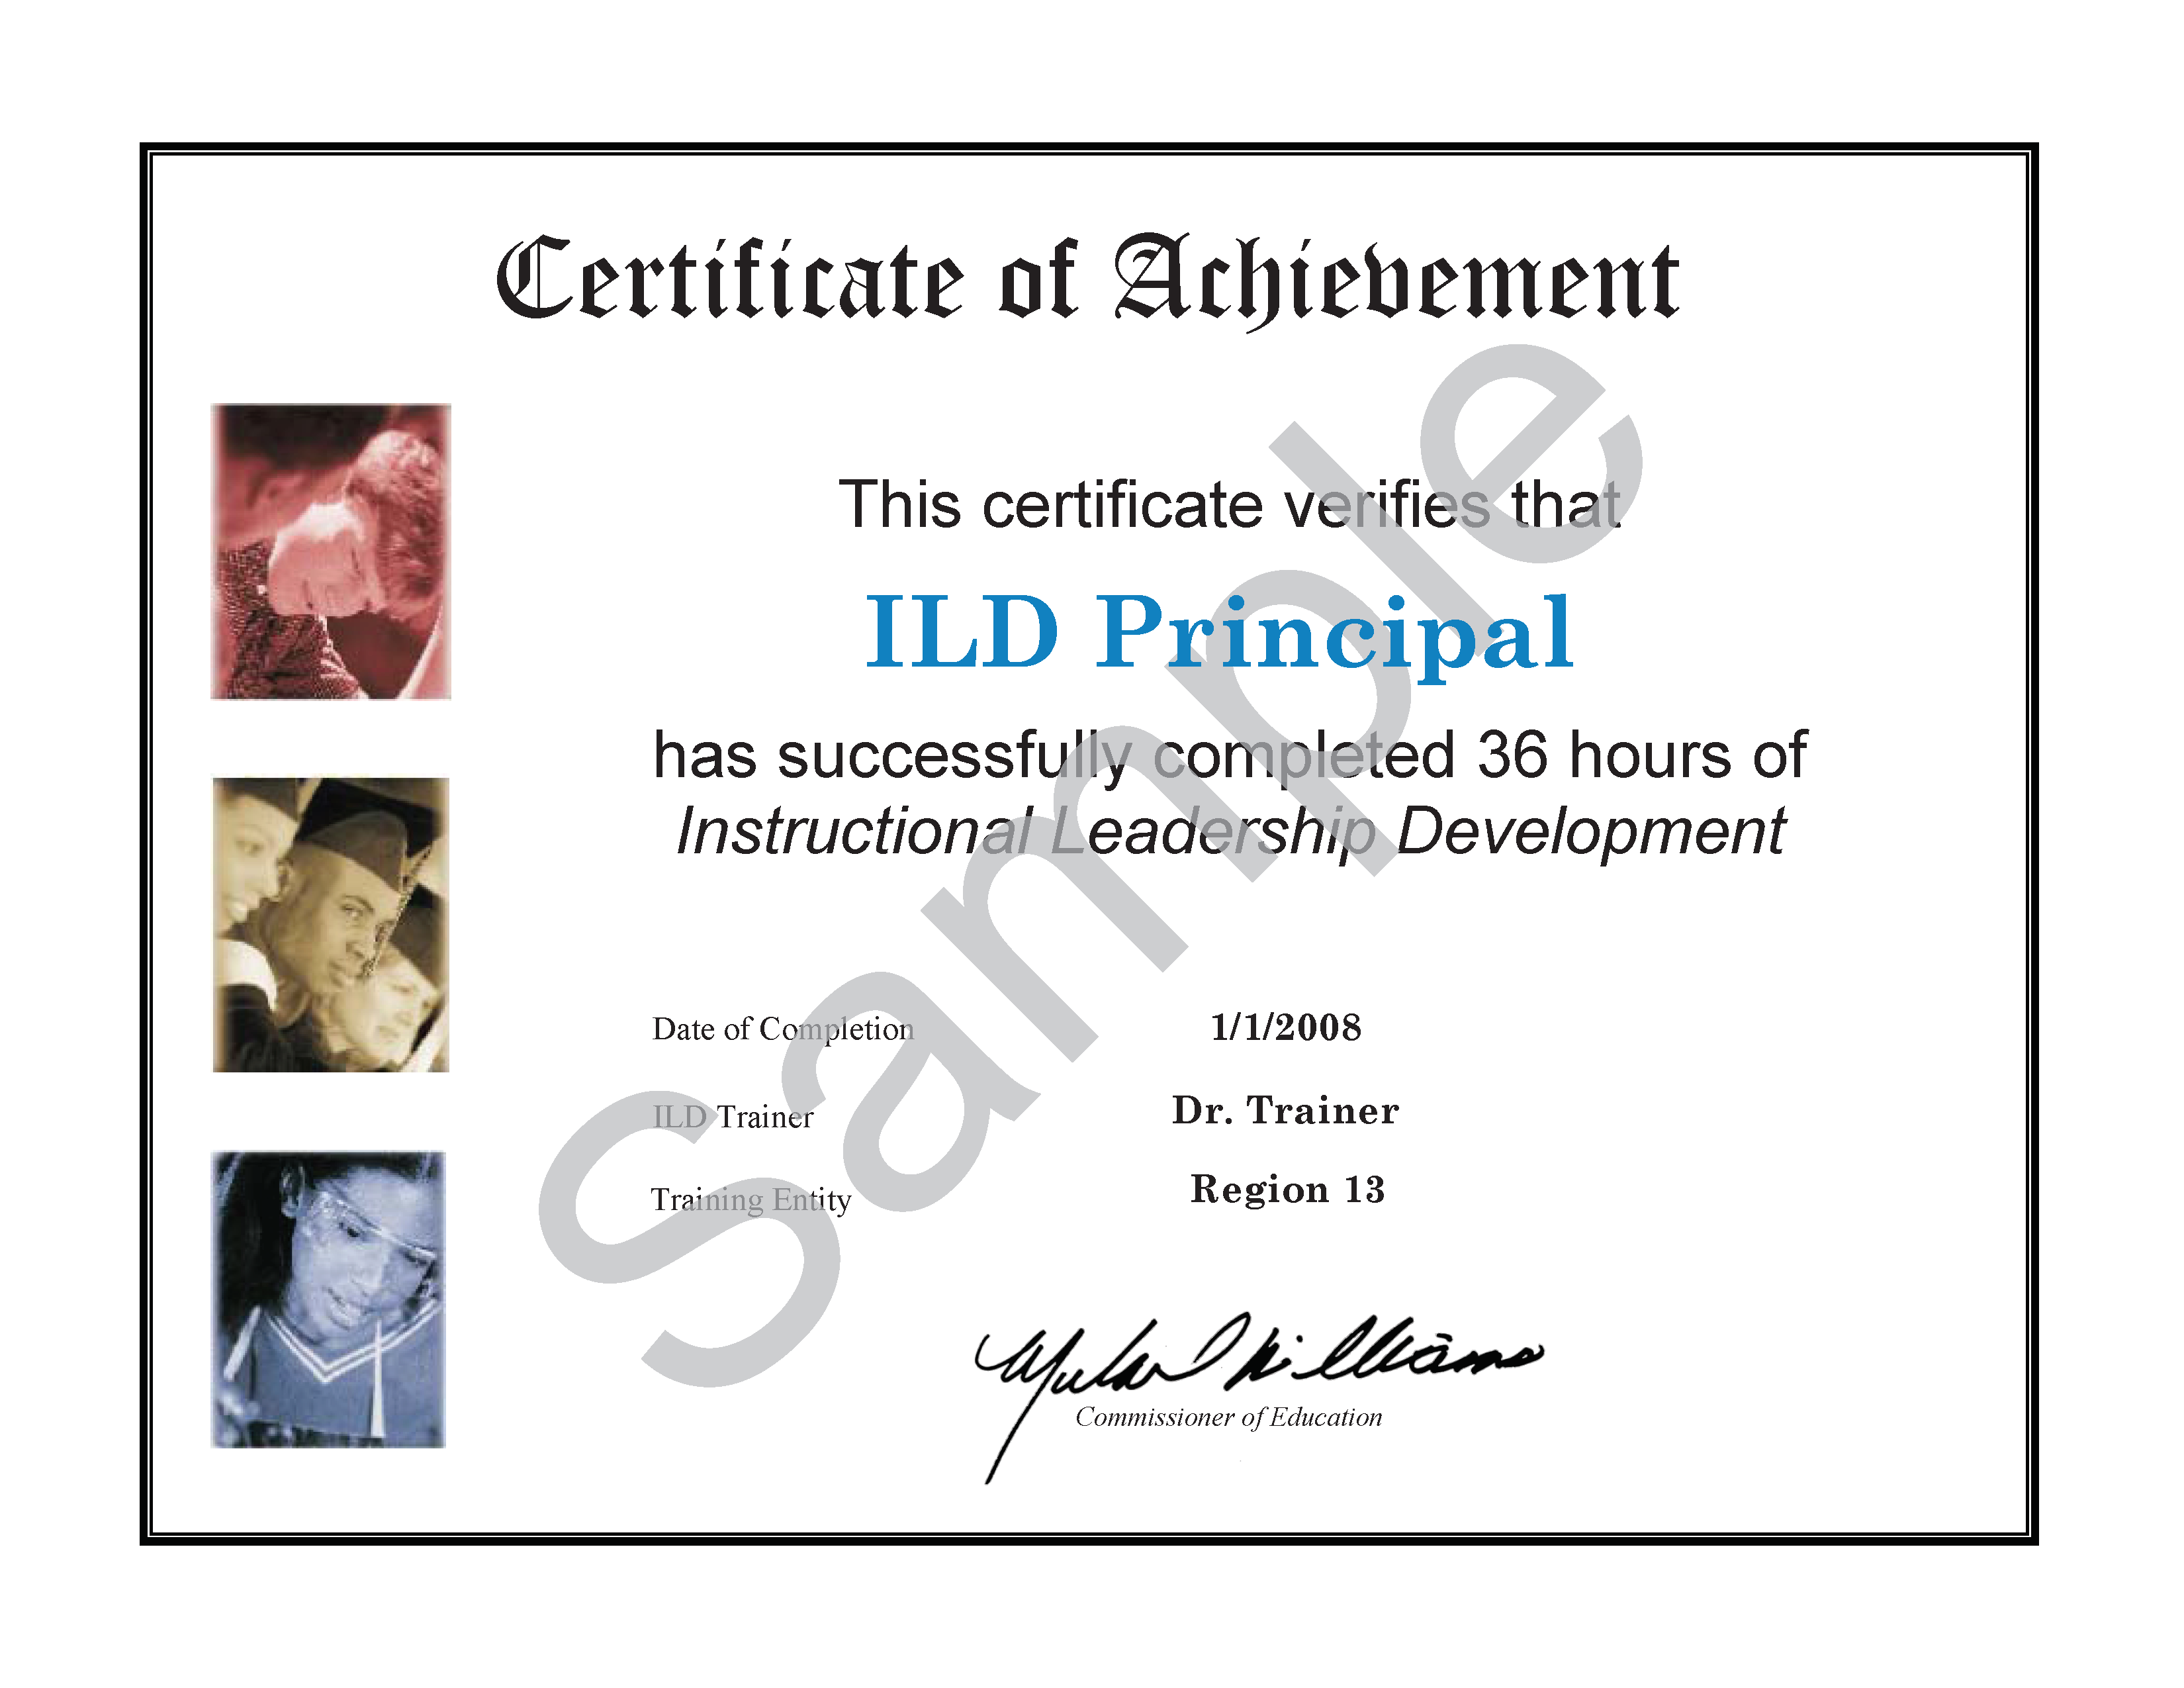 ILD Certificate